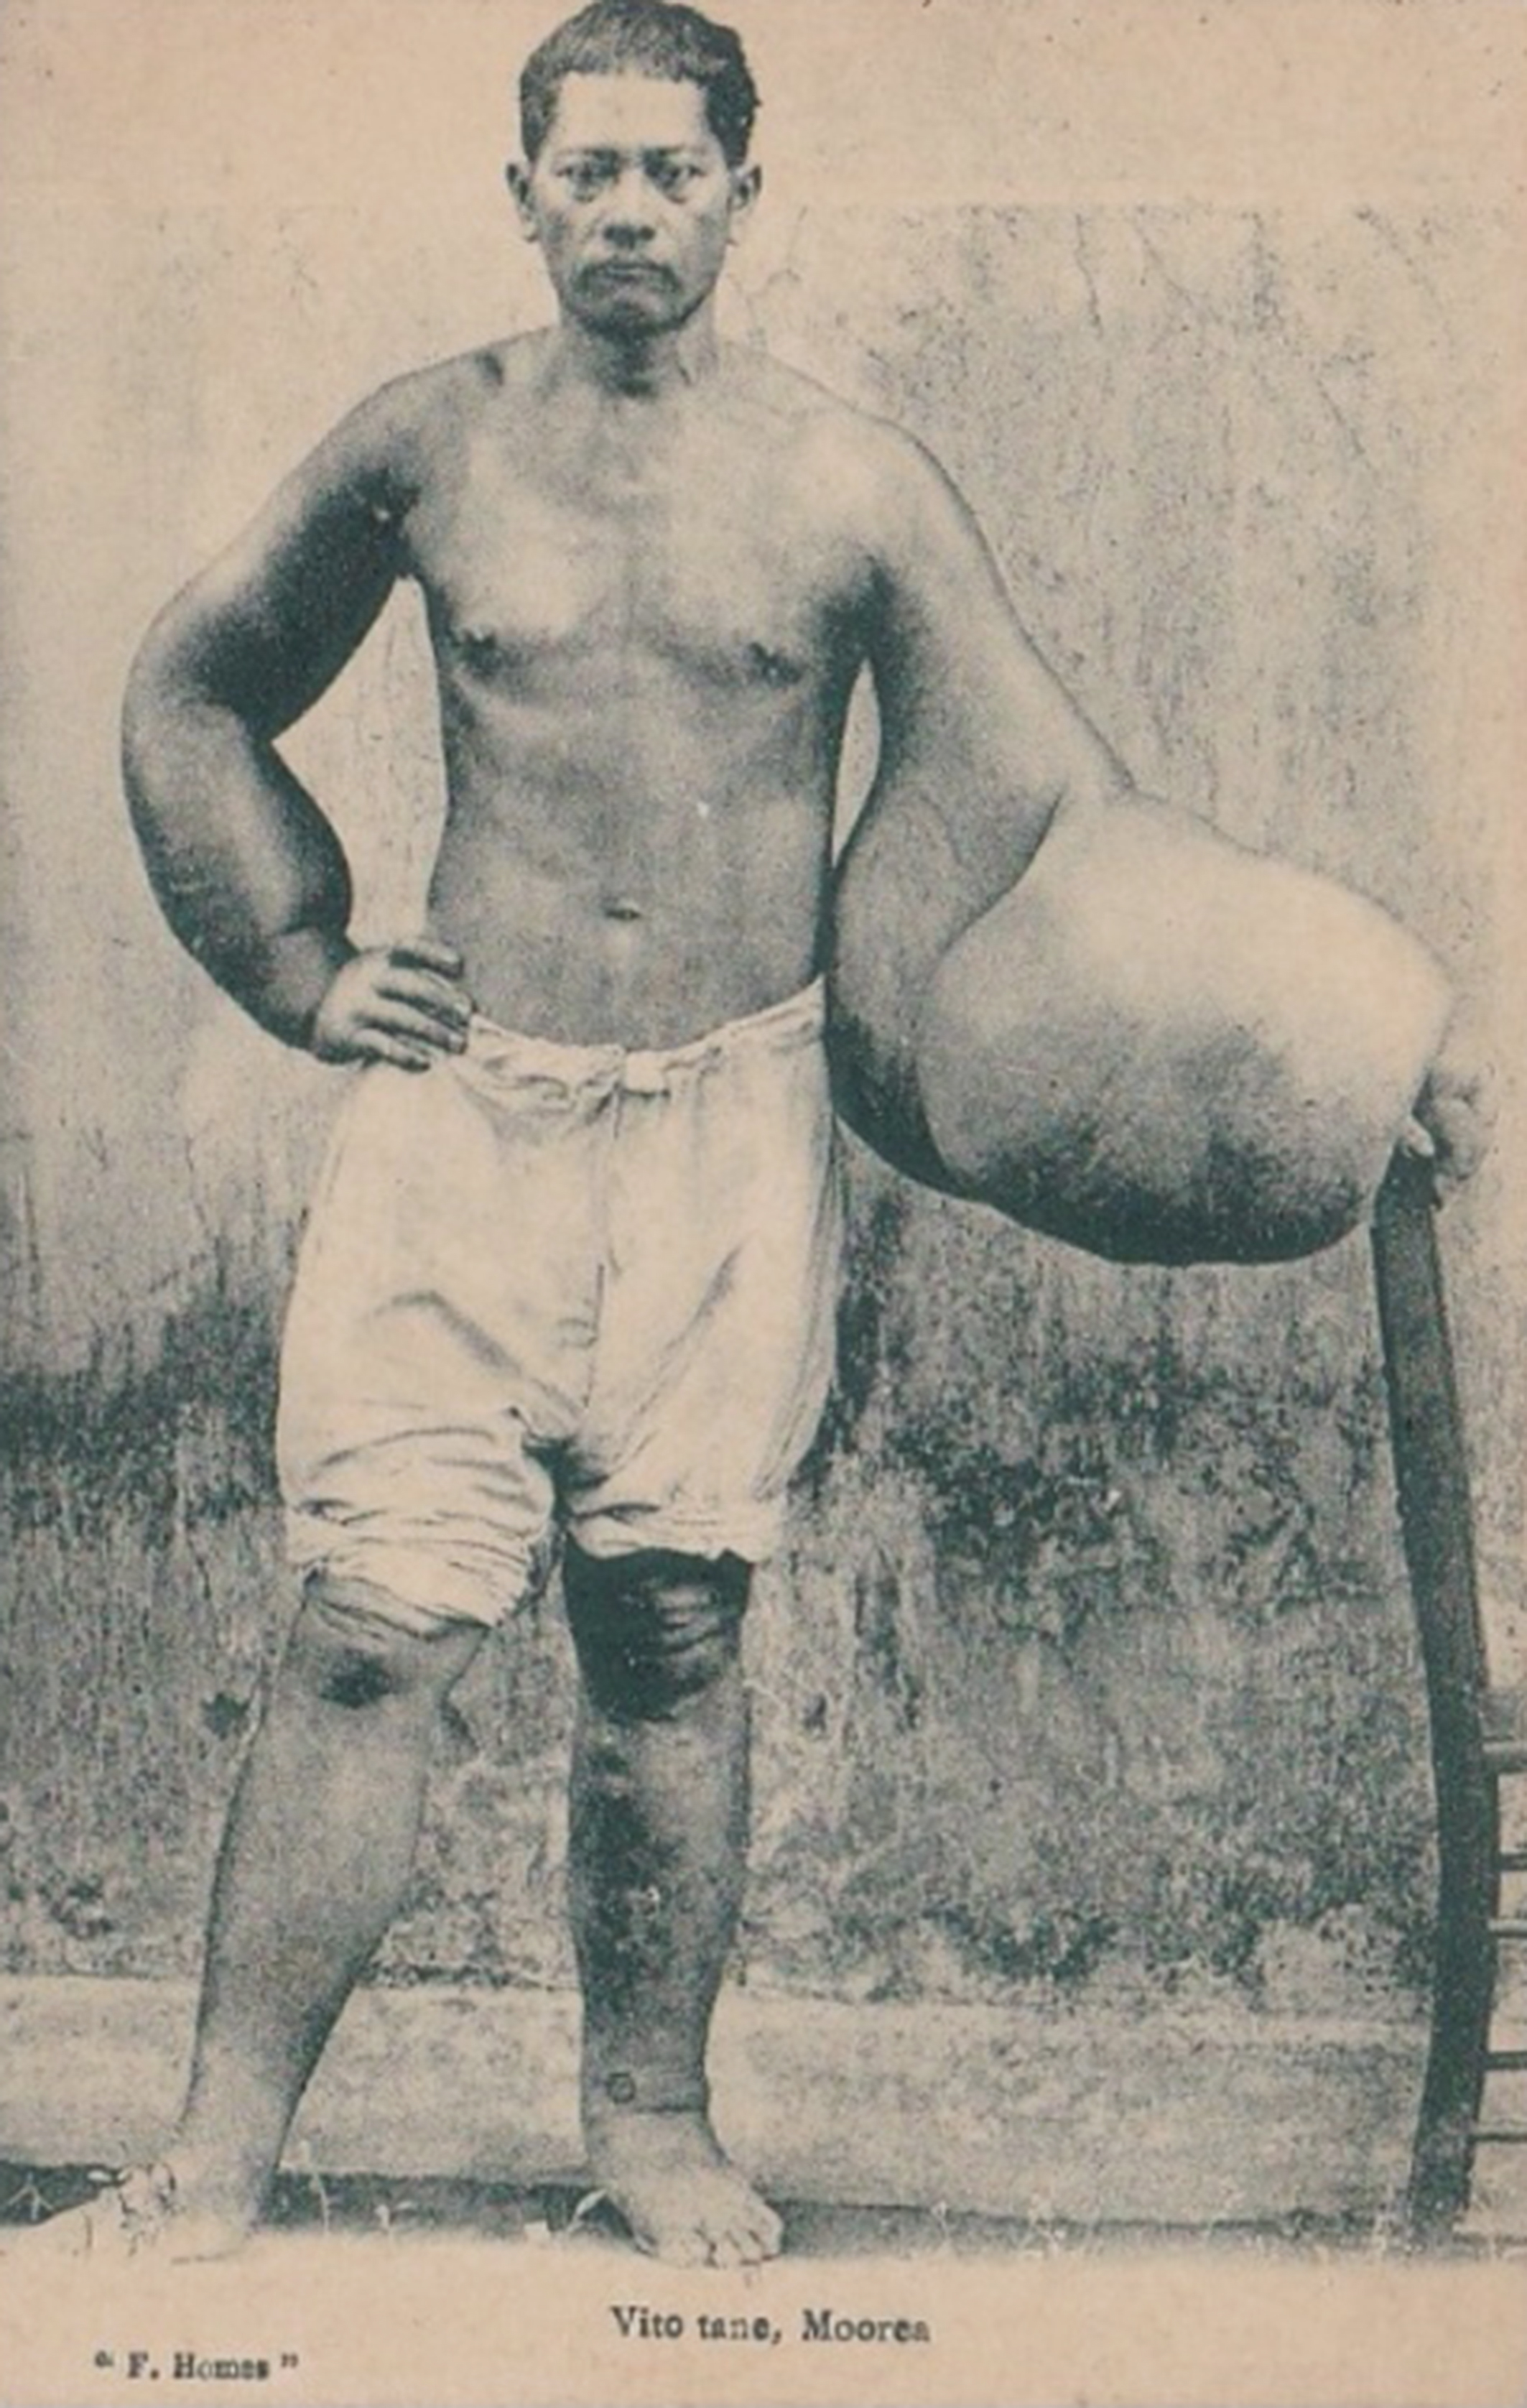 Vito tane de Moorea vers 1900. Photo F. Homes